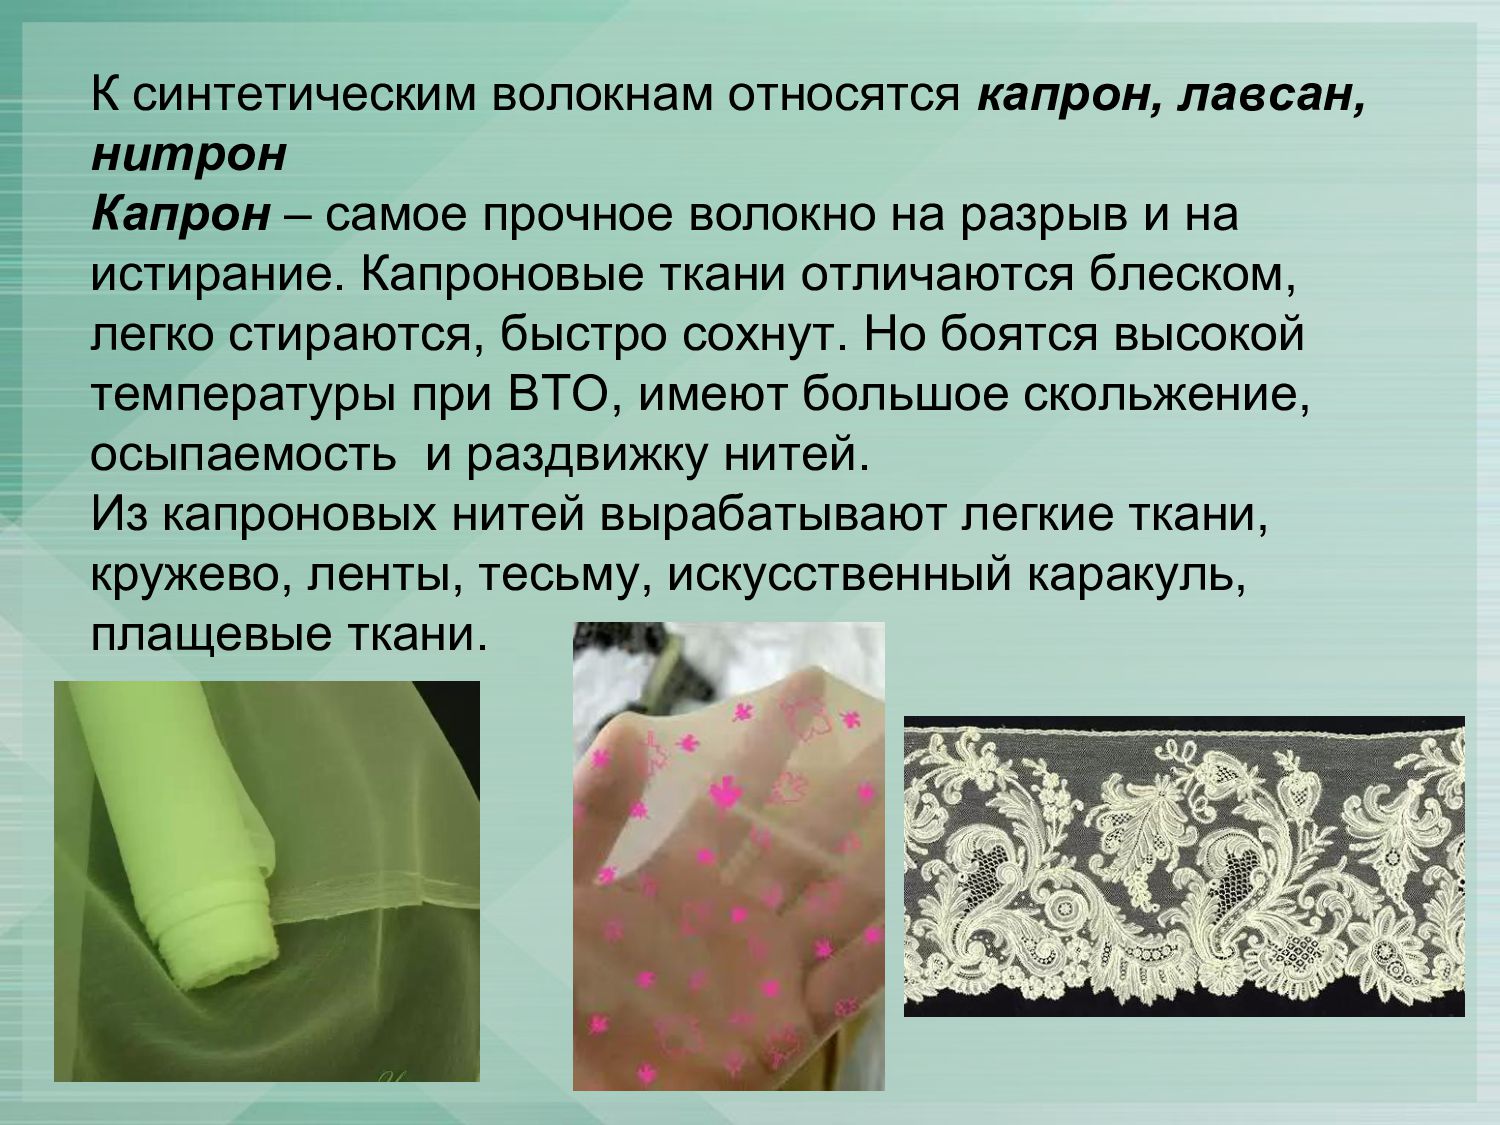 Ткани изготавливаются из. Синтетические волокна капрон. Капрон и Лавсан синтетические волокна. Синтетические ткани Лавсан. Ткани из синтетических волокон.